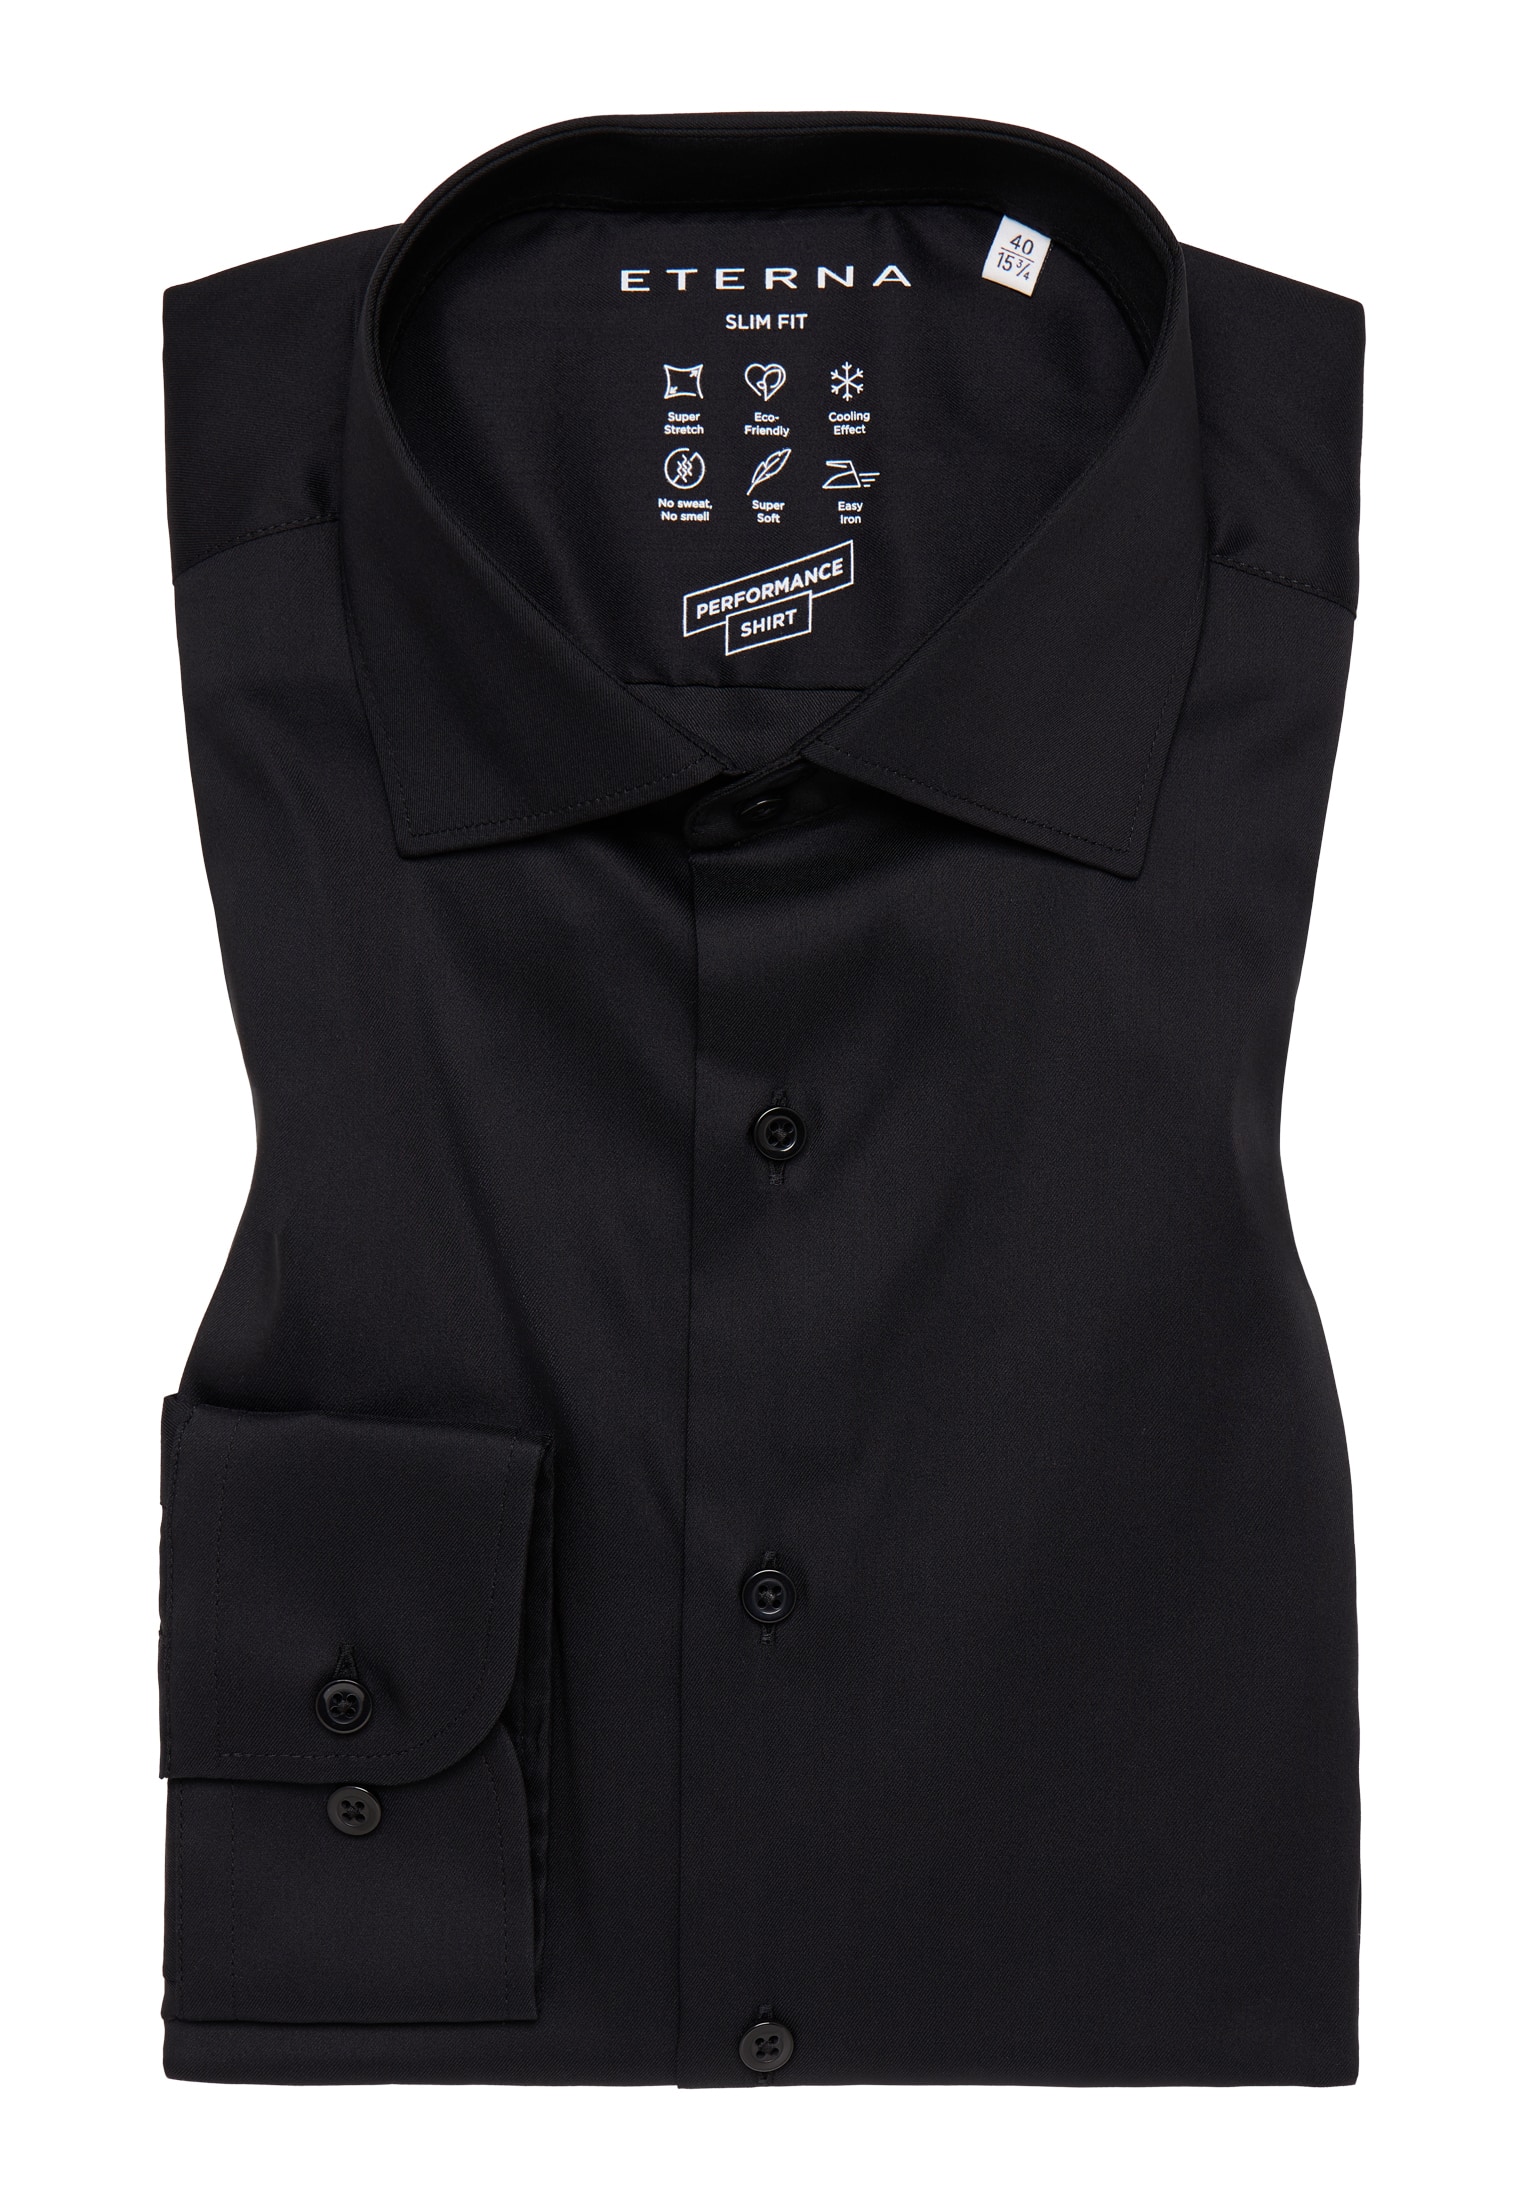 SLIM FIT Performance Shirt in black plain | black | 38 | long sleeve |  1SH02217-03-91-38-1/1